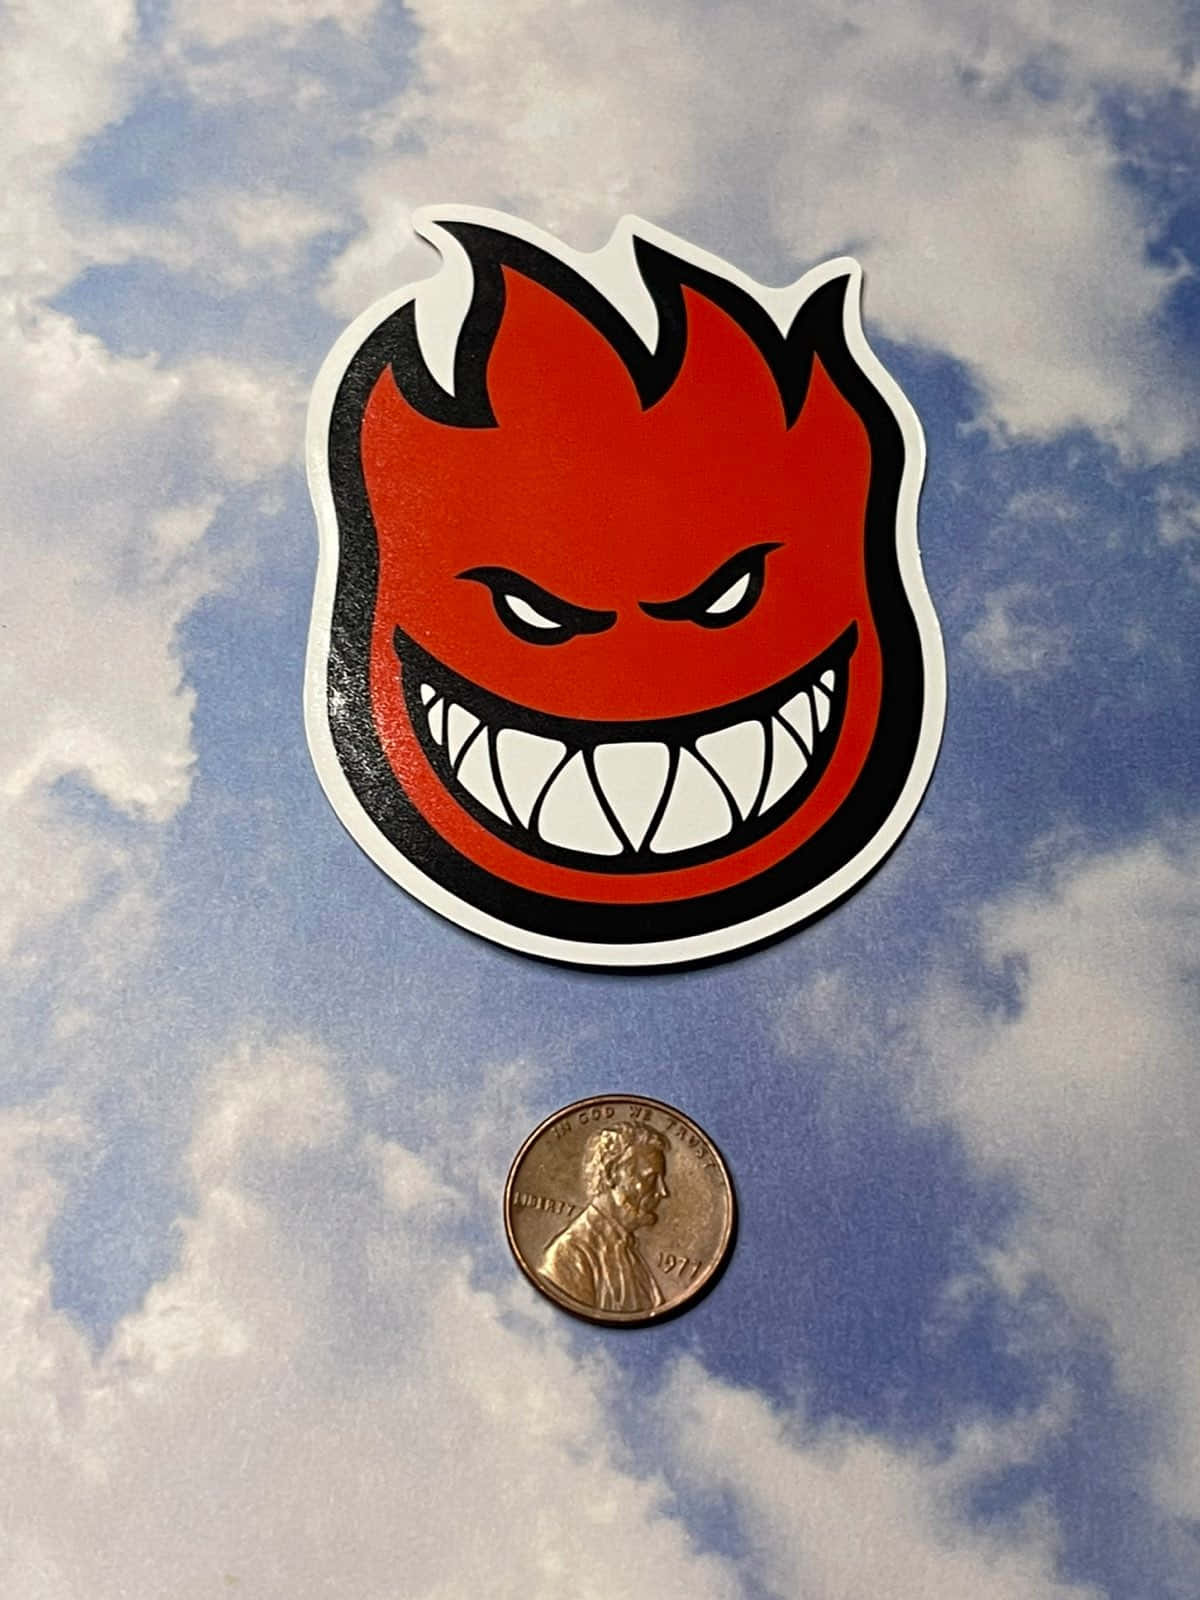 Spitfire Skate Sticker And A Coin Wallpaper